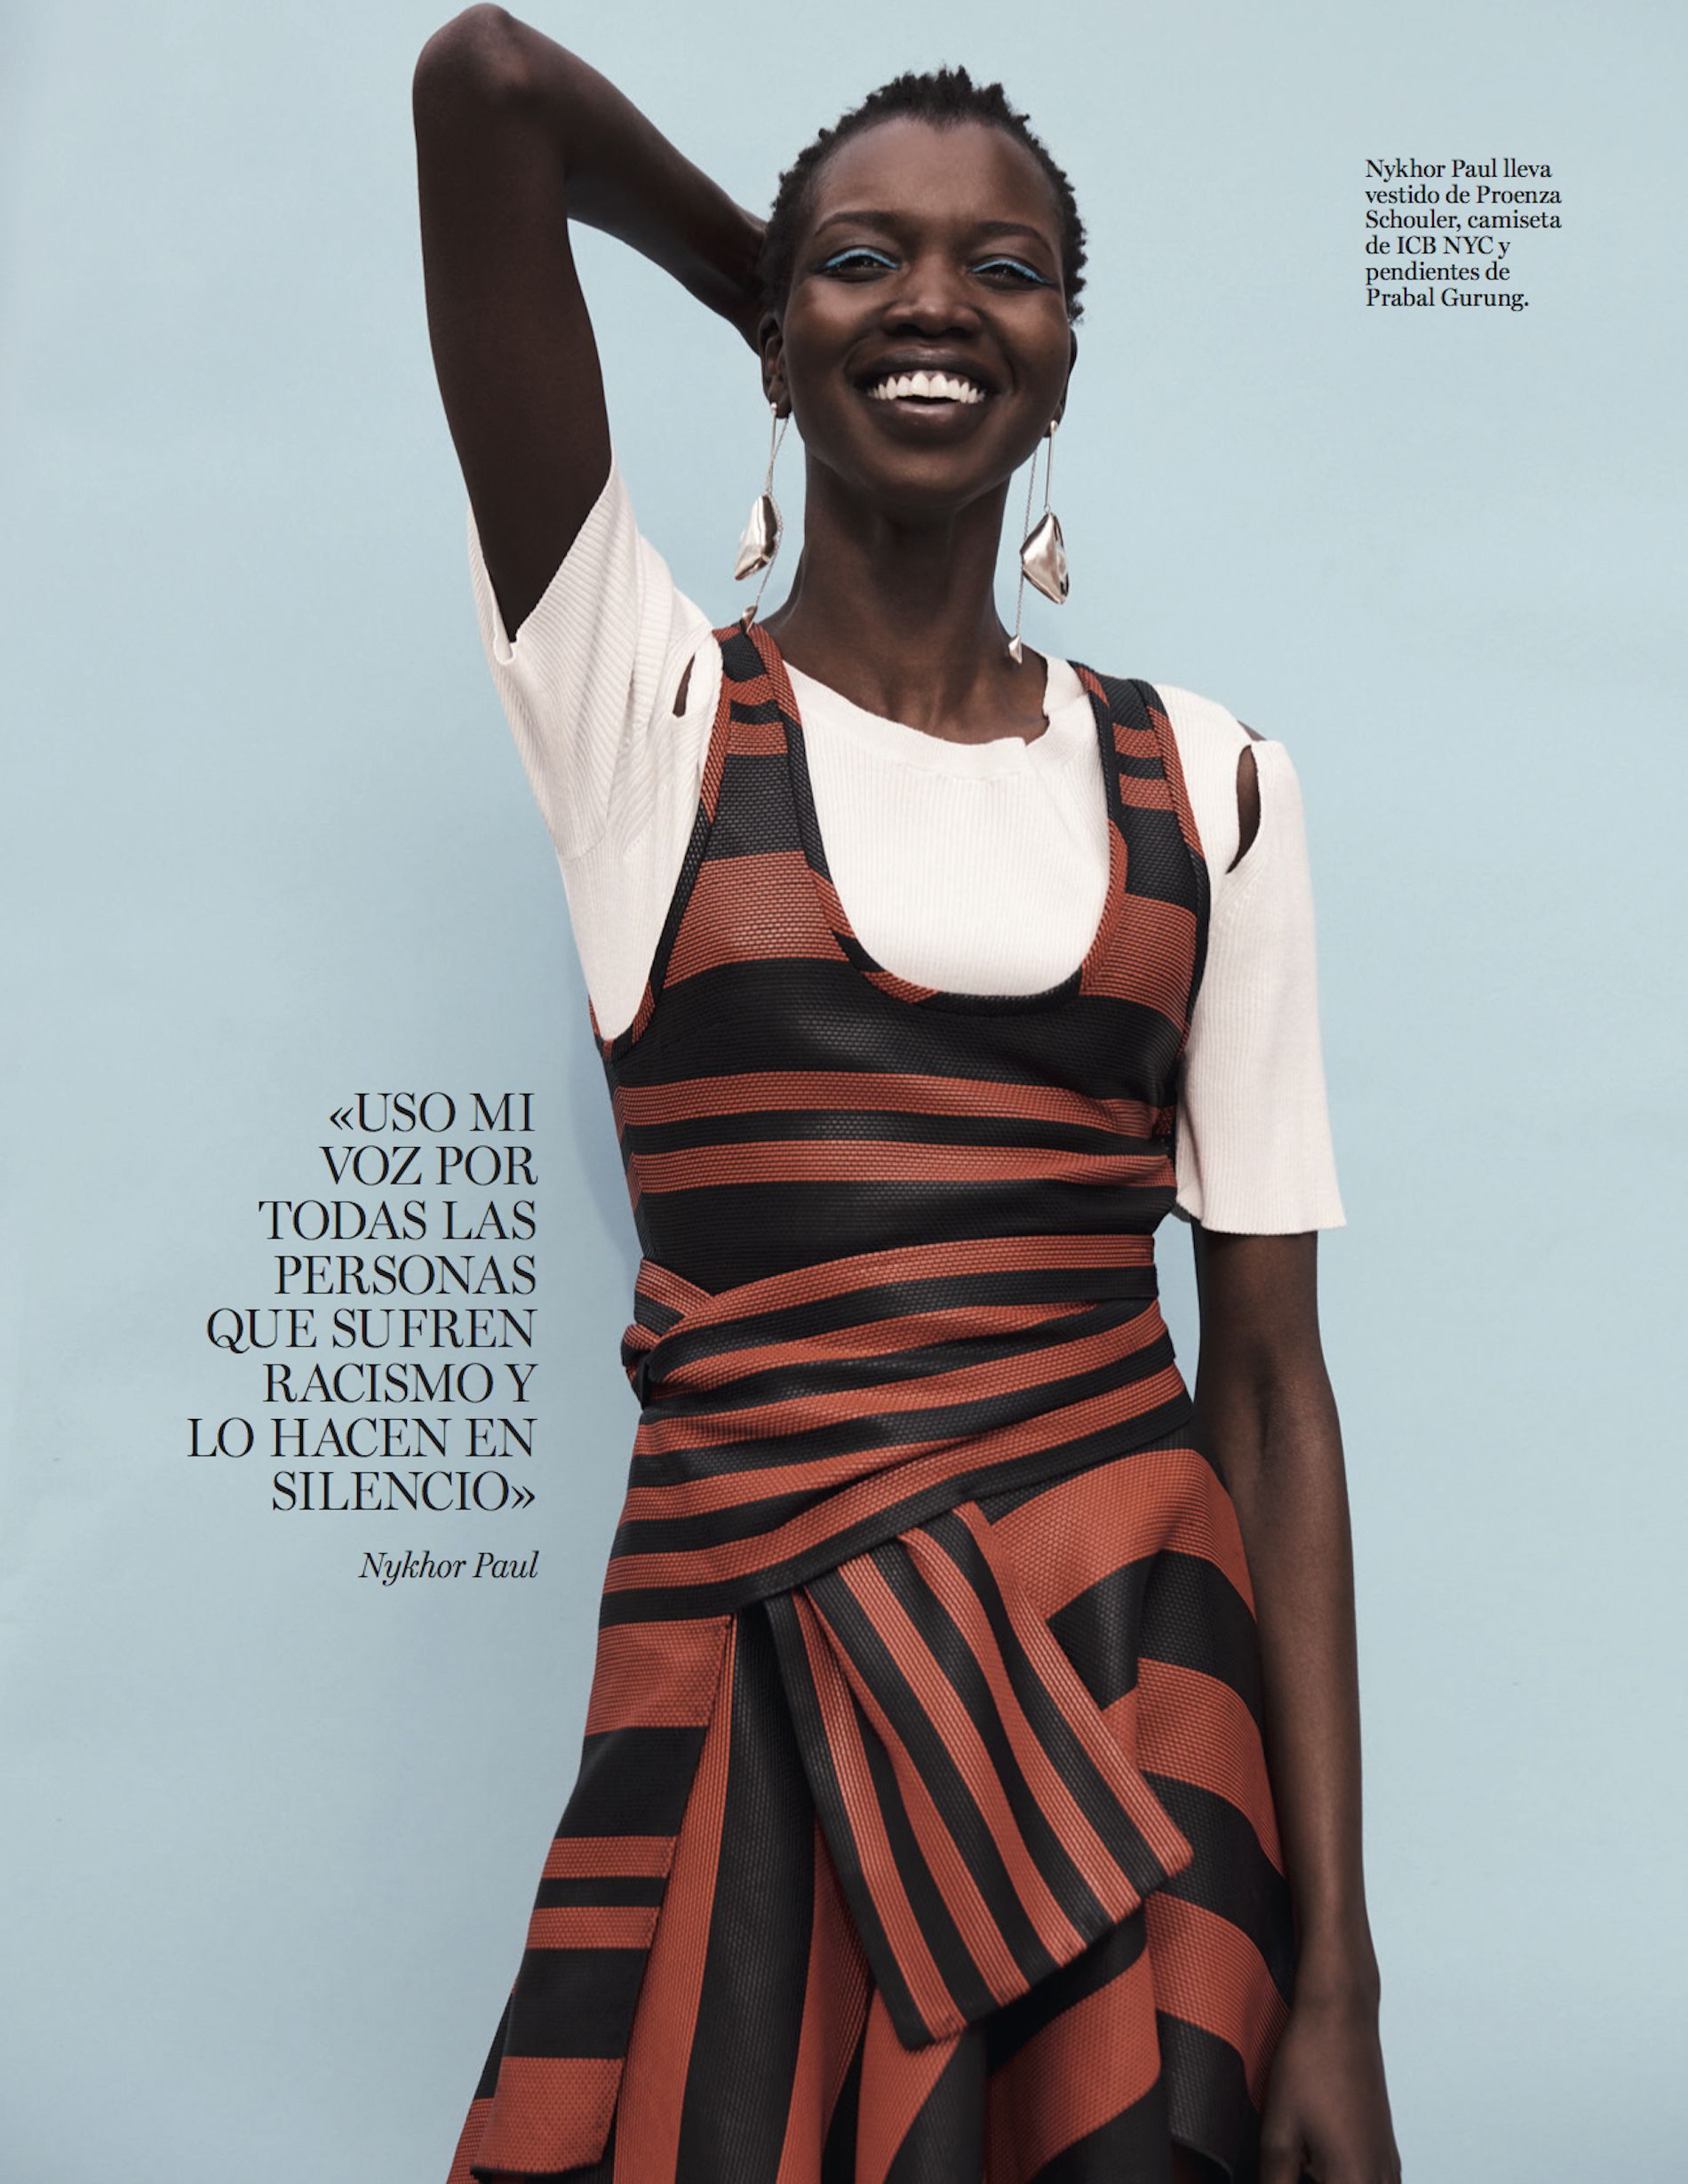 Meet the African models breaking barriers